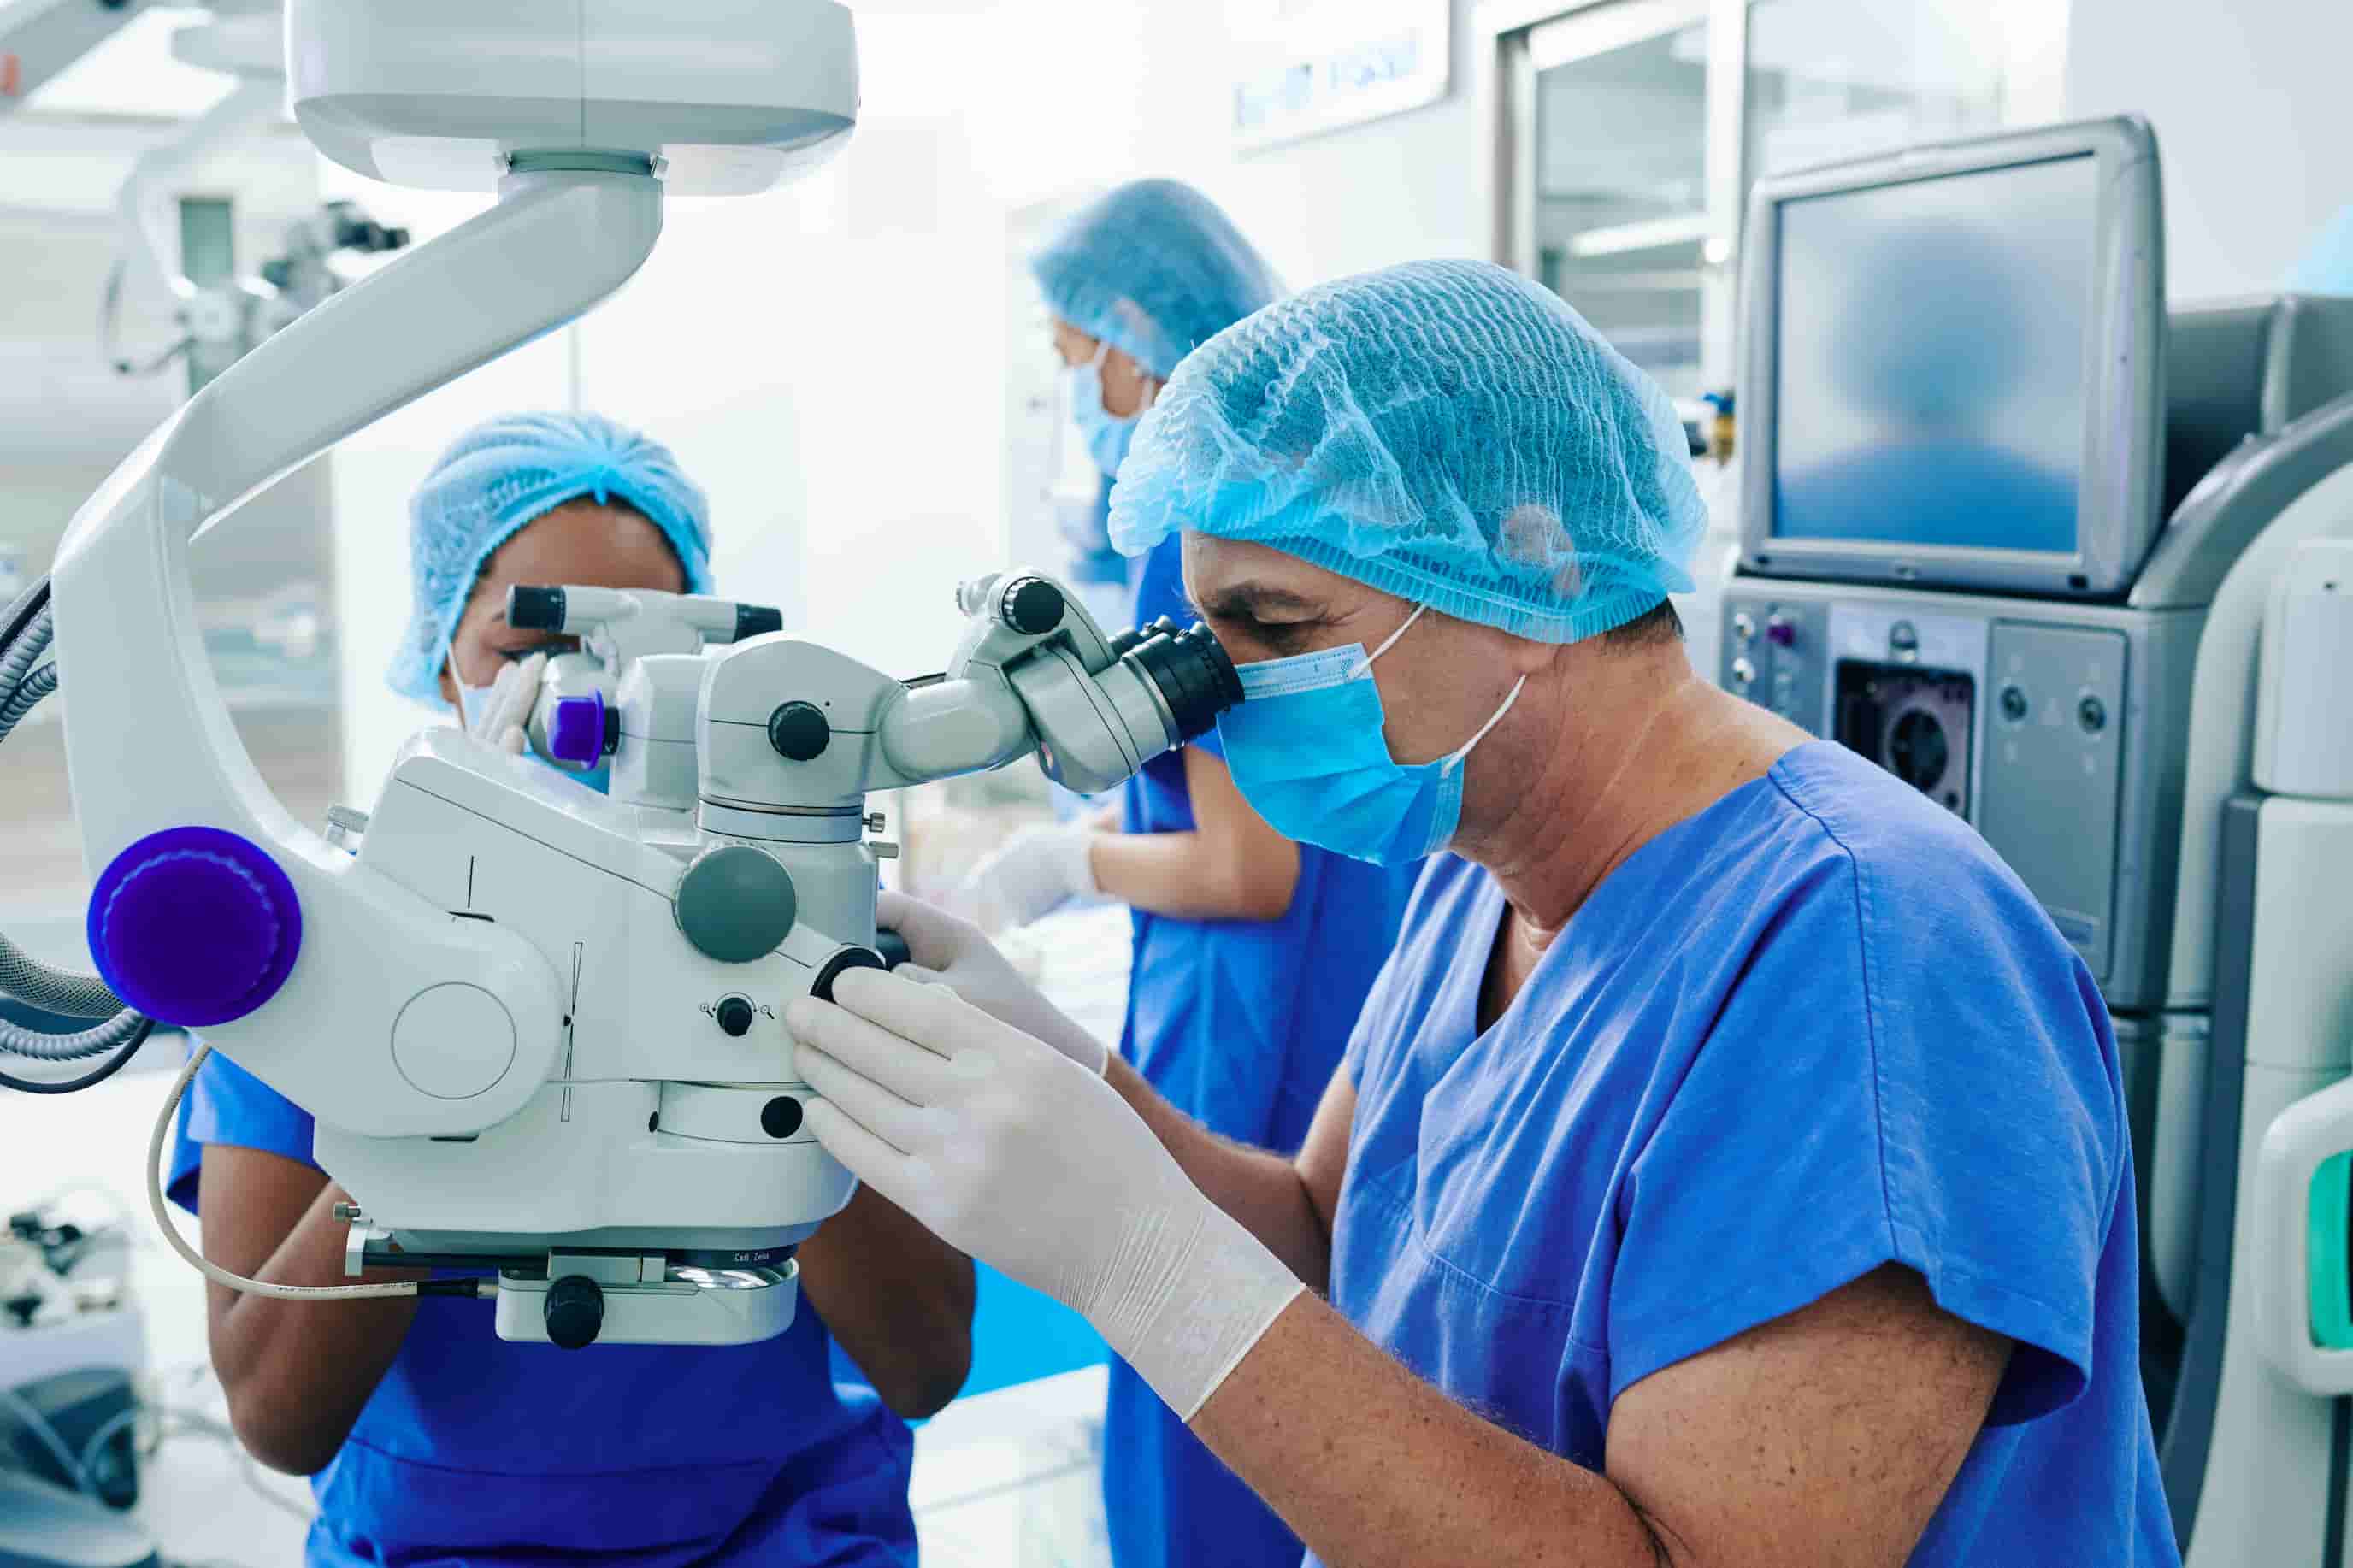 Turkiye eye surgery